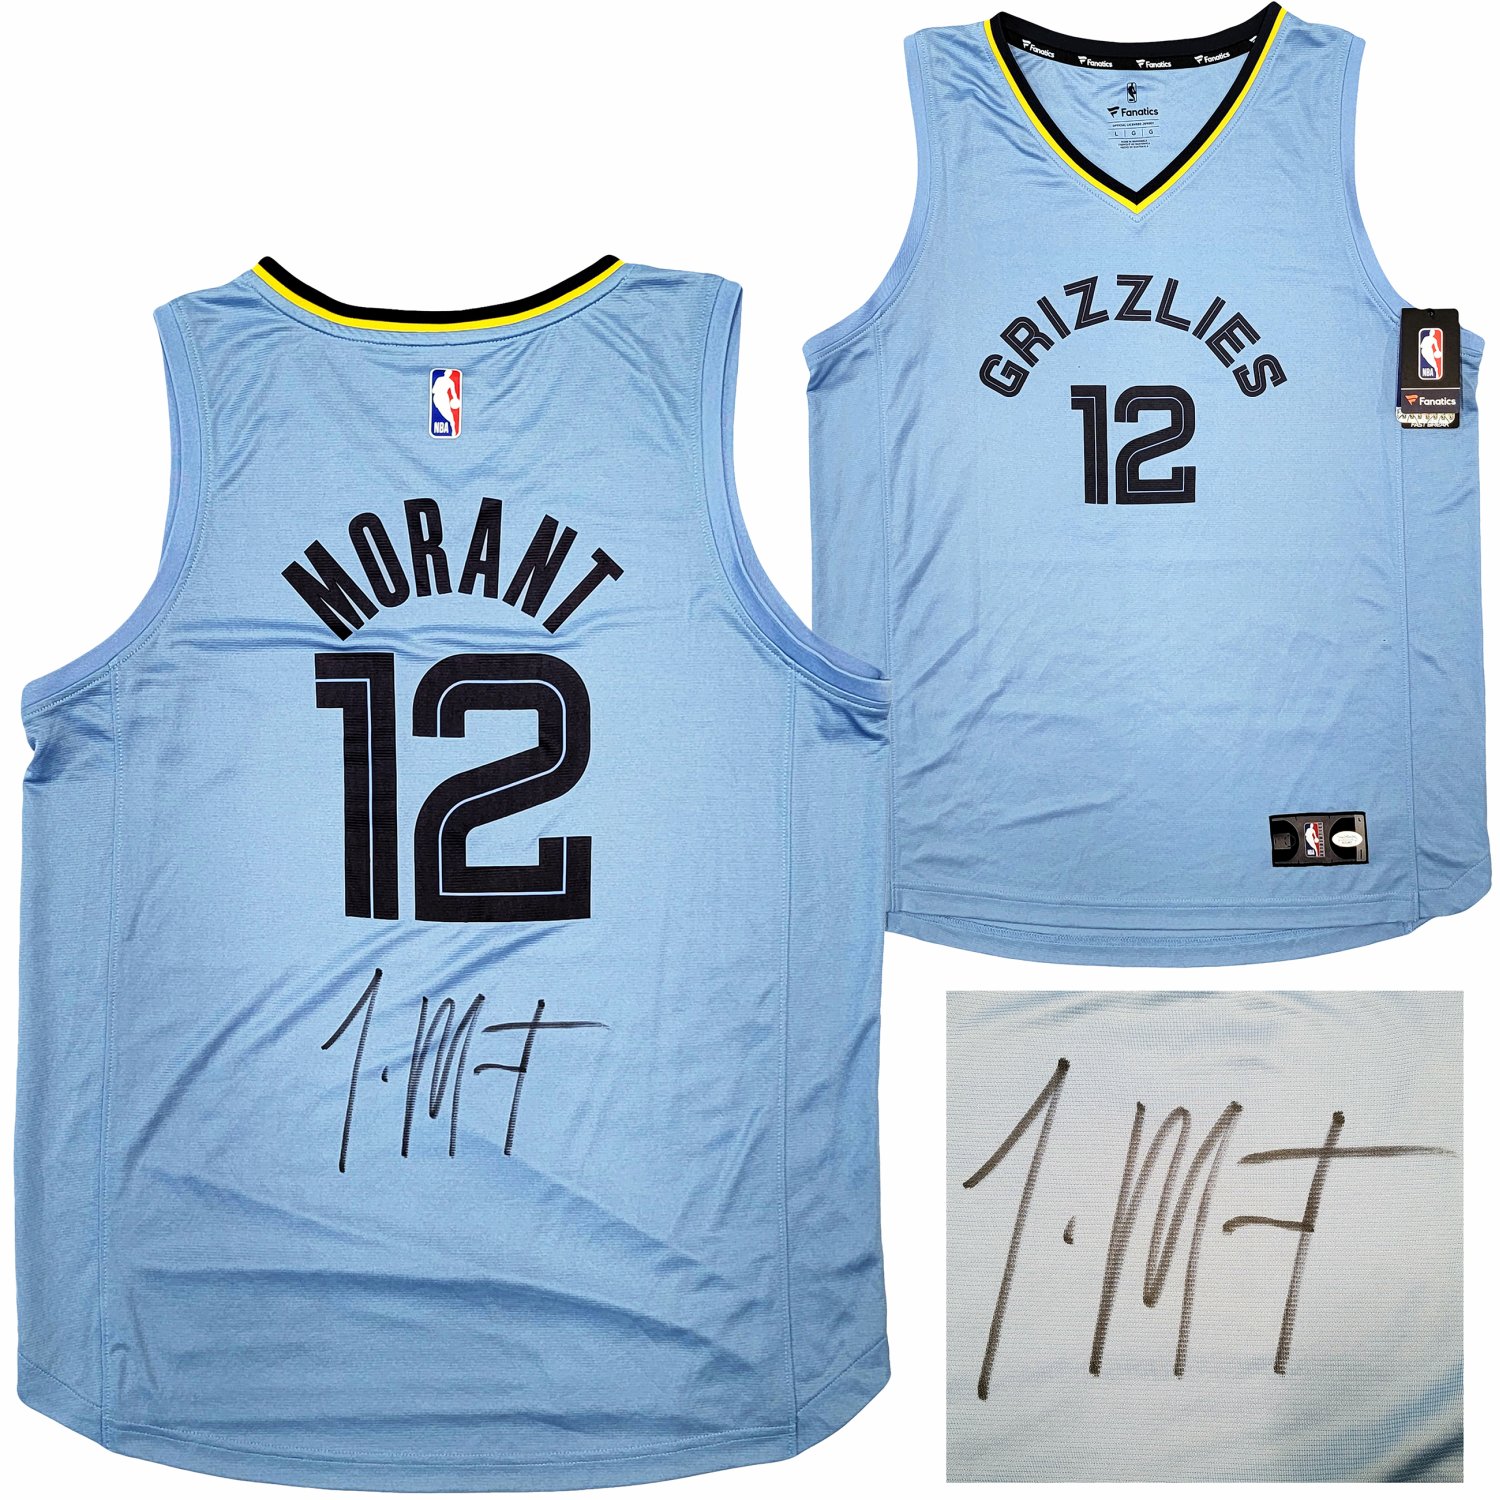 Official Memphis Grizzlies Collectibles, Memorabilia, Autographed  Merchandise, Collector Items